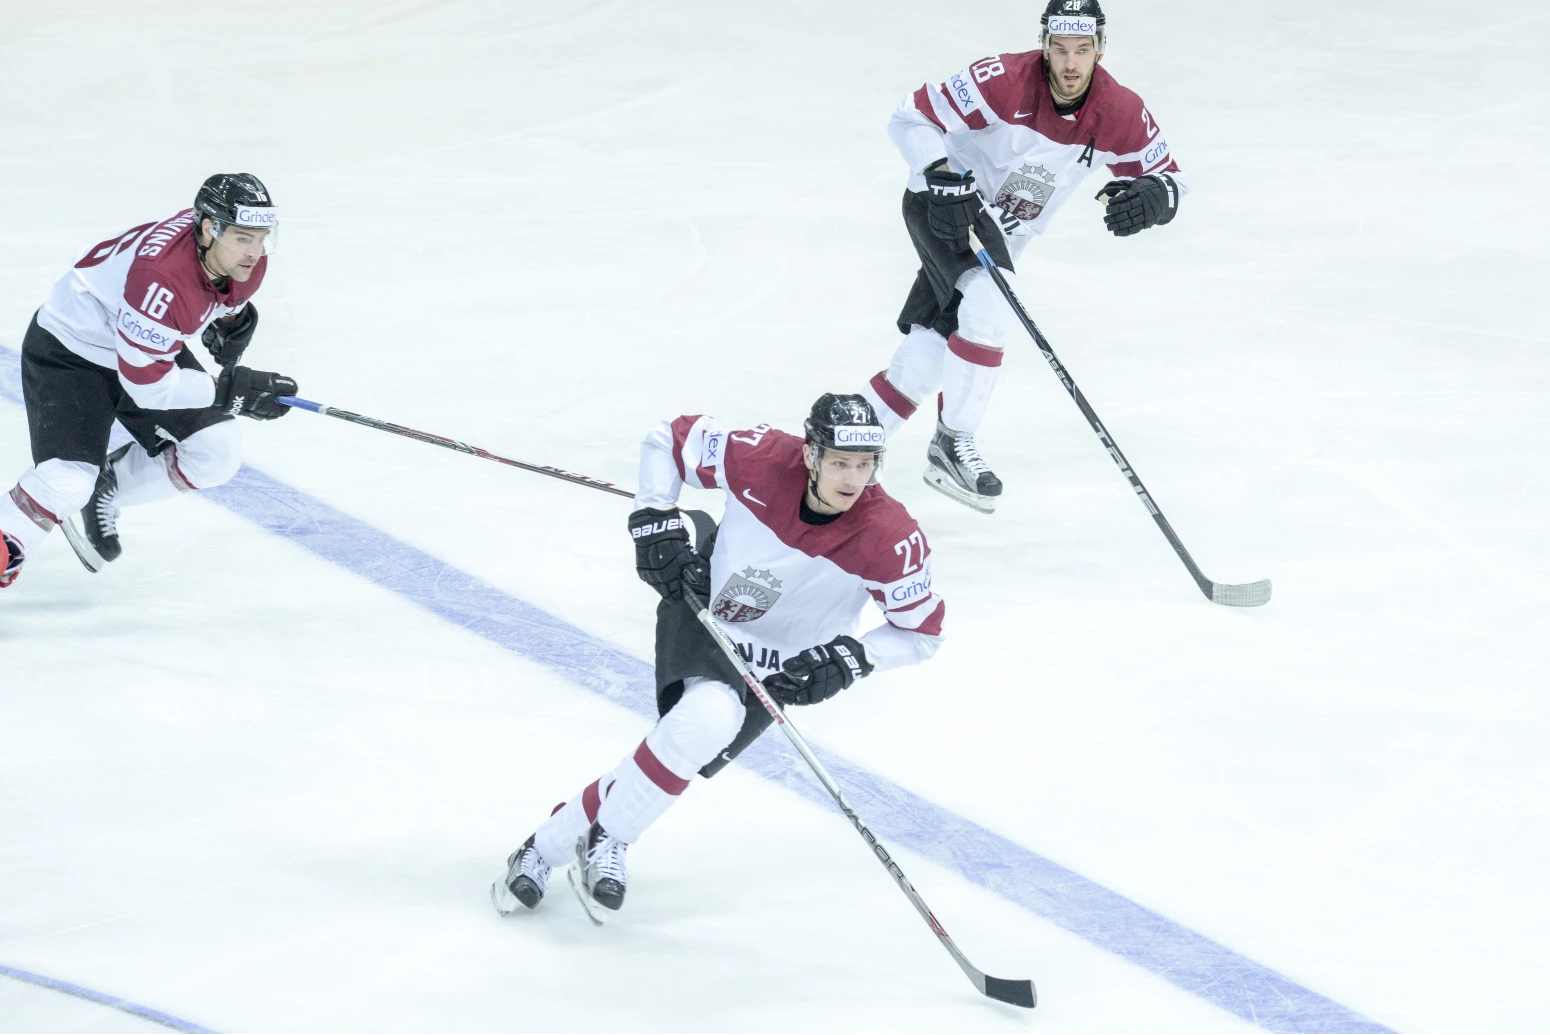 2016 IIHF Ice Hockey World Championship gears up for worldwide delivery